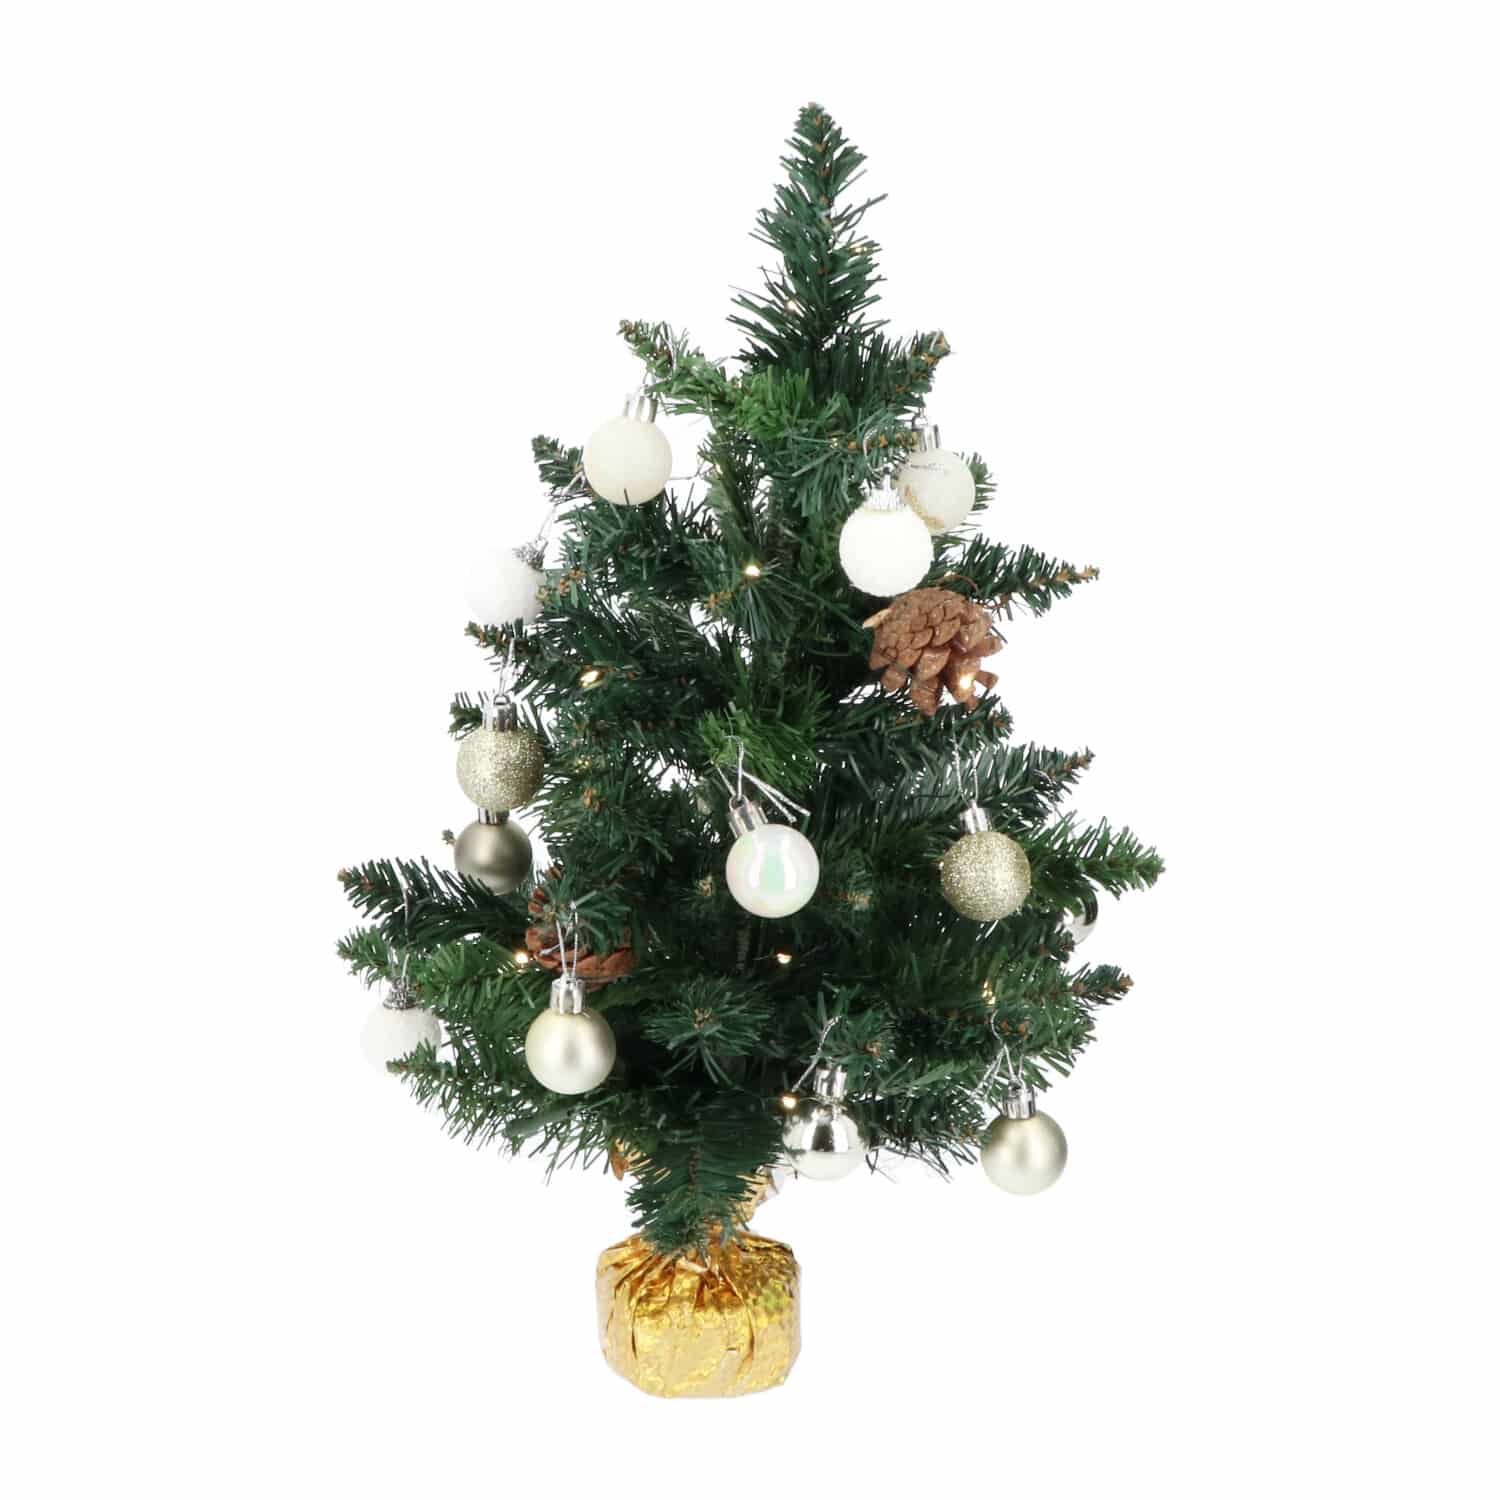 4goodz Kunstkerstboom LED Verlichting en versiering 50cm - Goud/Wit